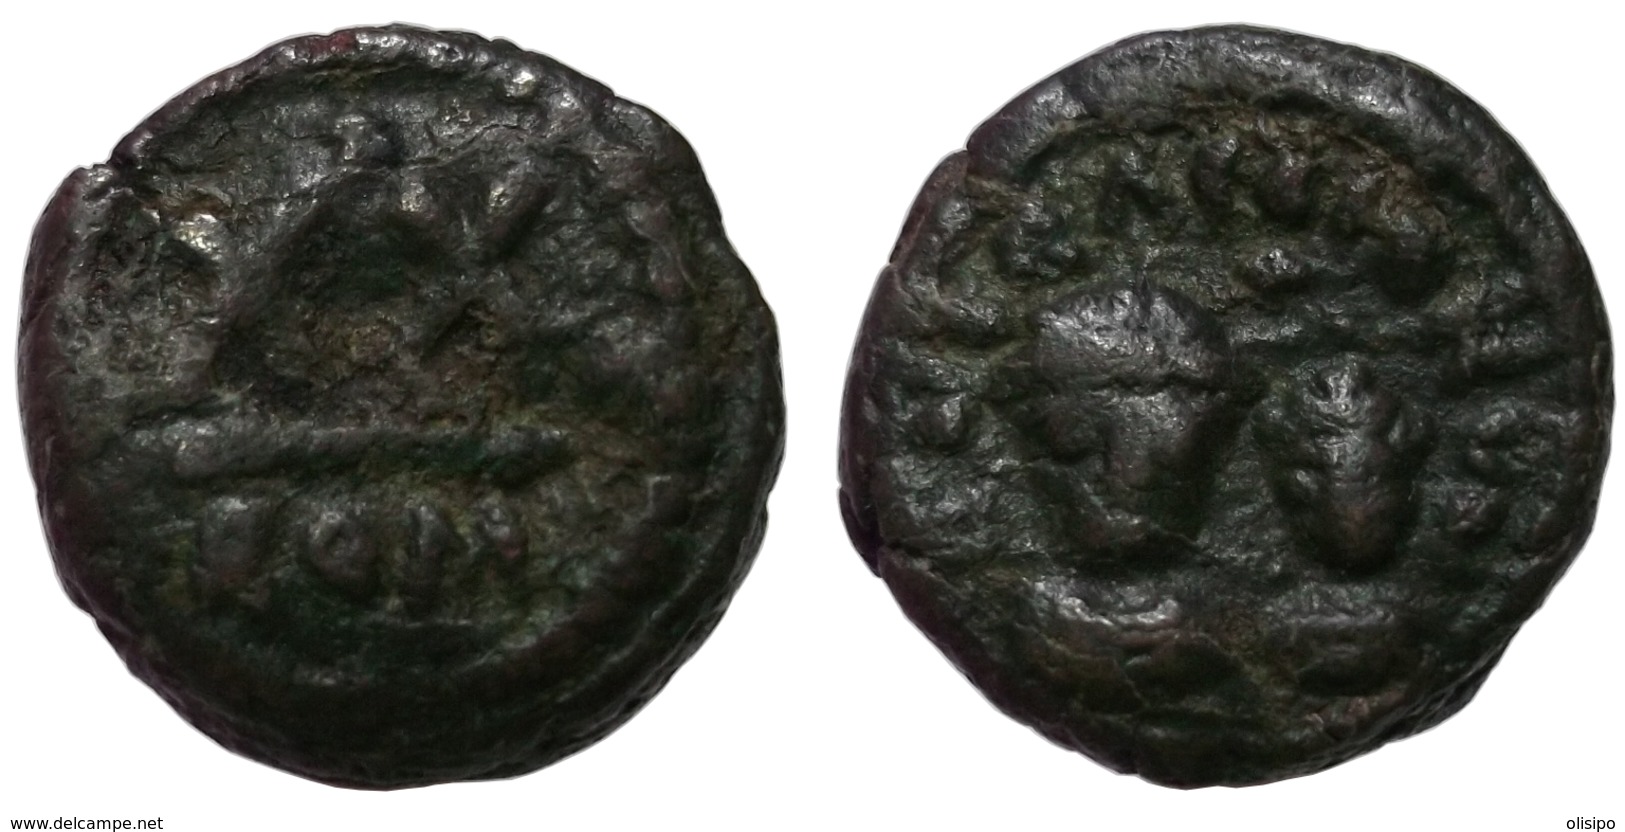 AE Half Follis - Heraclius (610-641 AD) Byzantine Empire - Byzantium